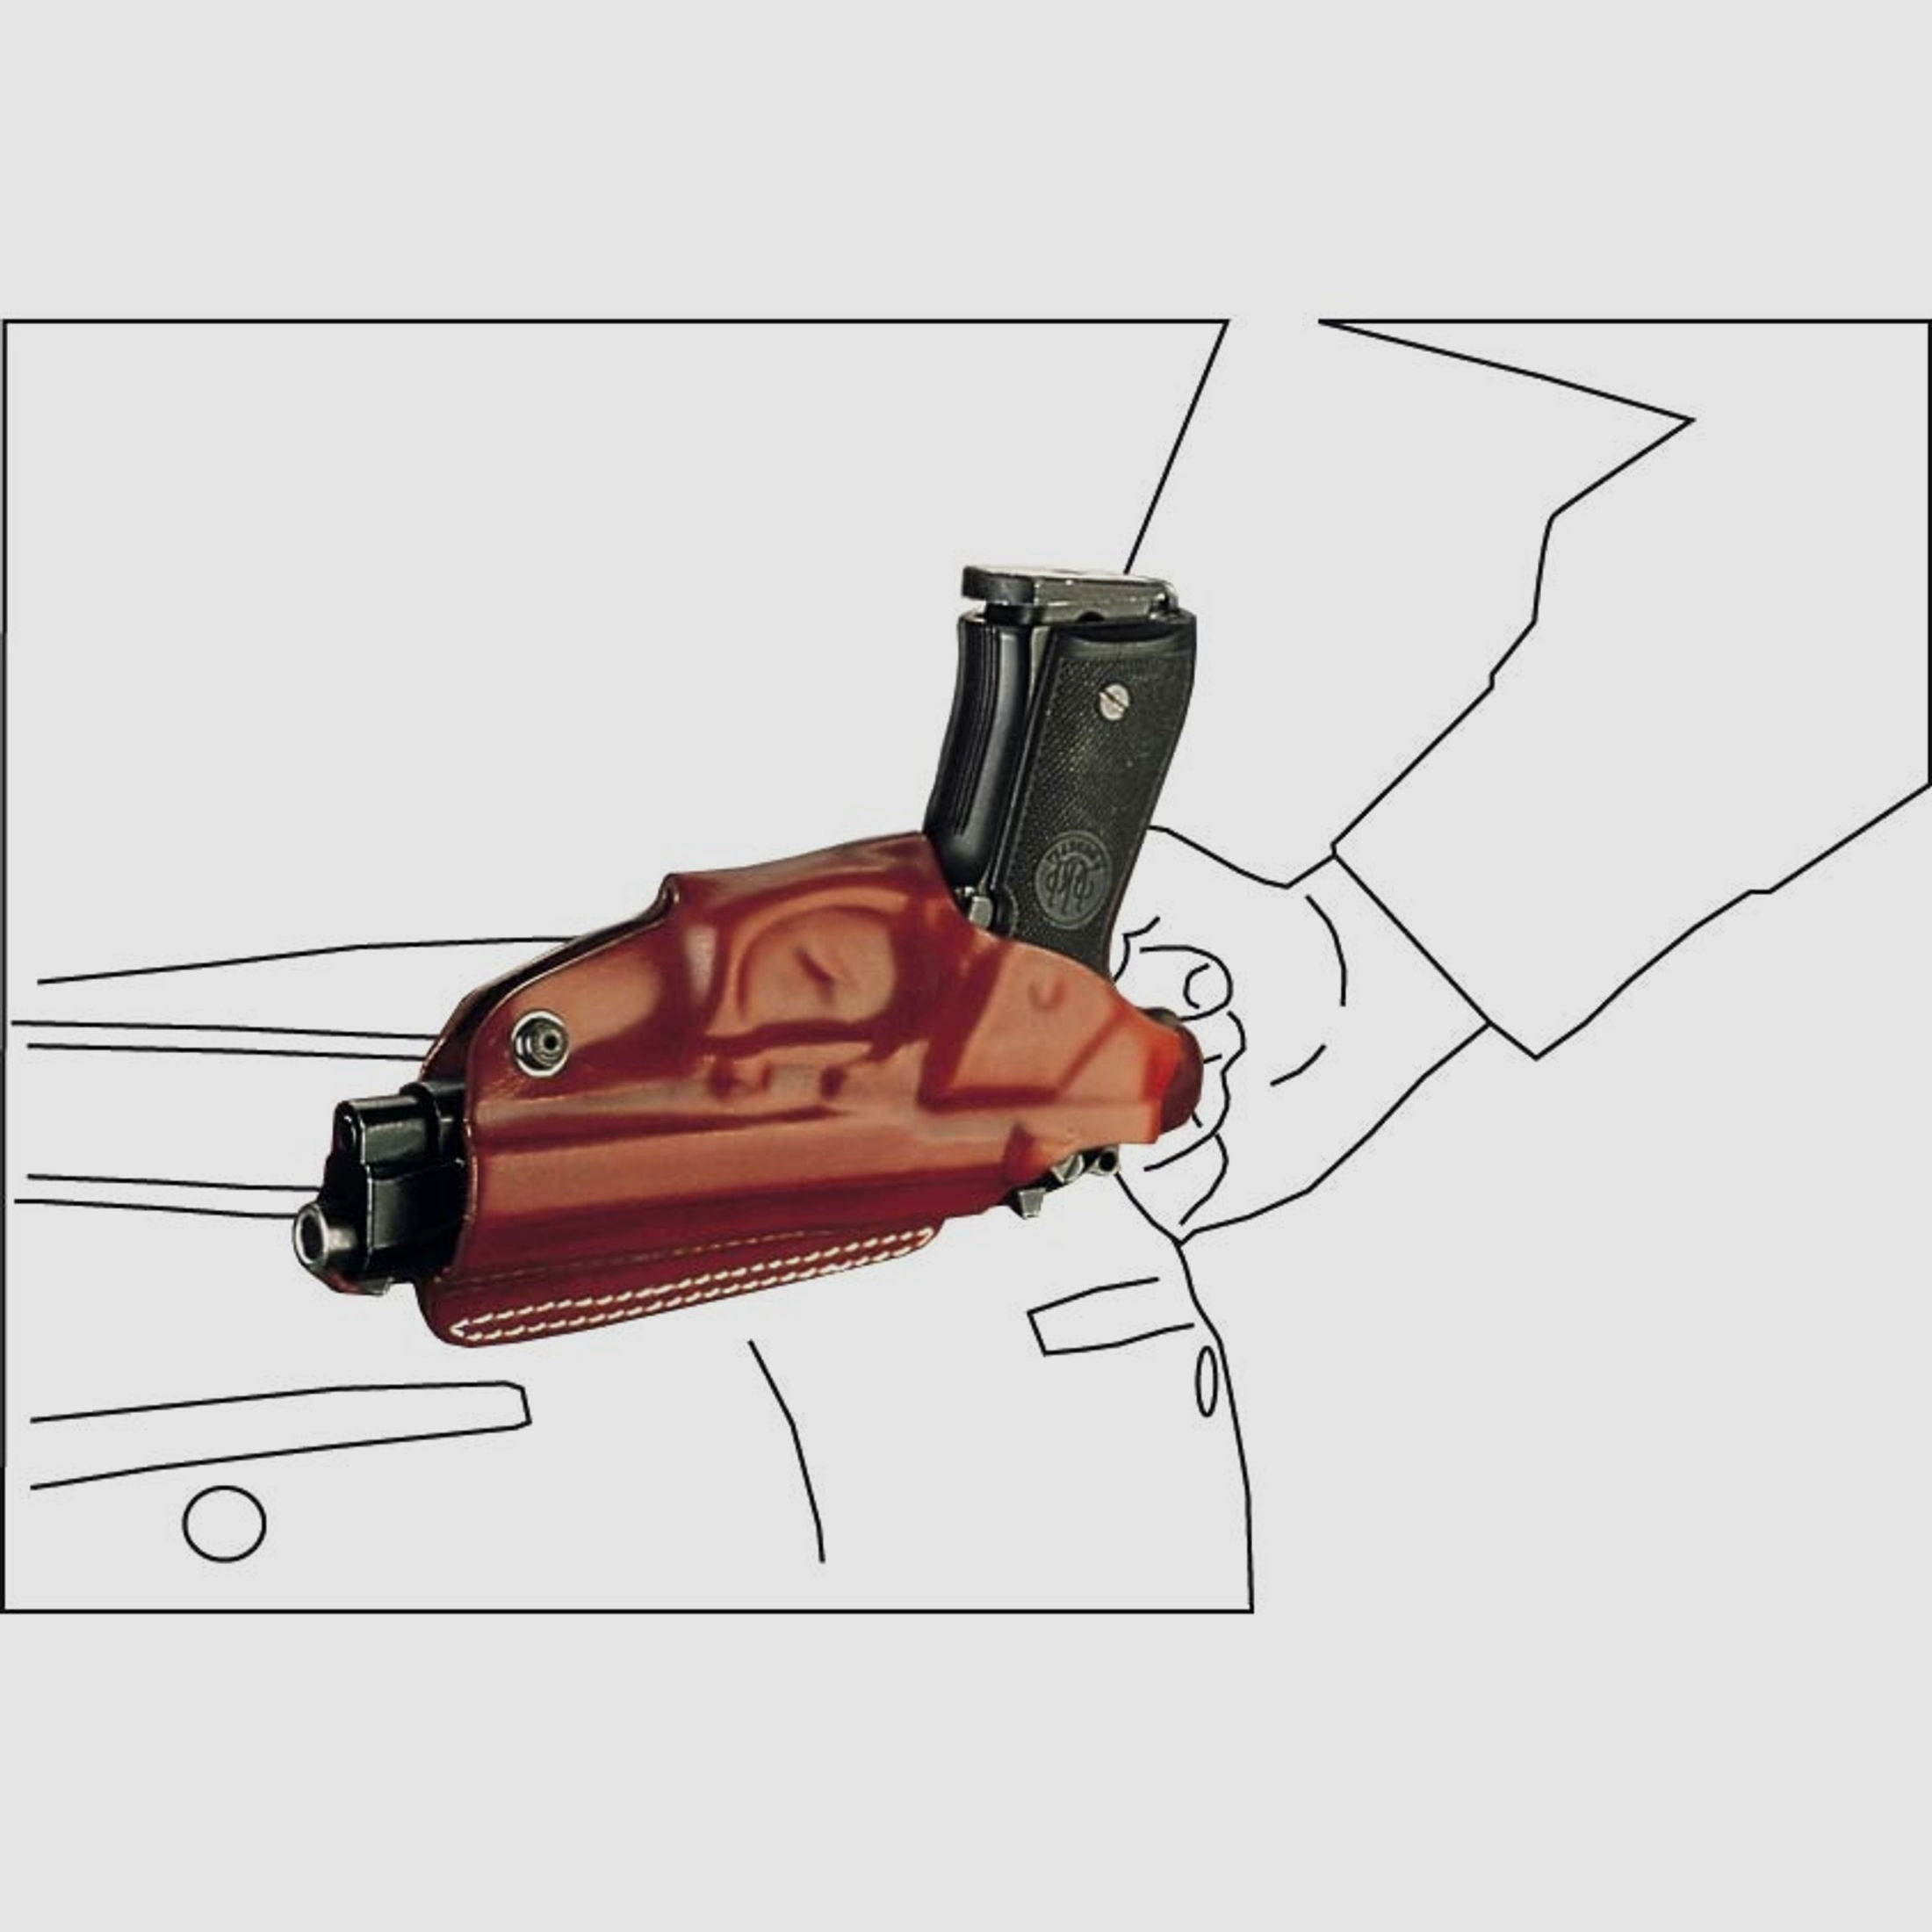 Mehrzweck-Schulterholster/Gürtelholster "Miami" Beretta APX /Compact/Centurion-Schwarz-Linkshänder